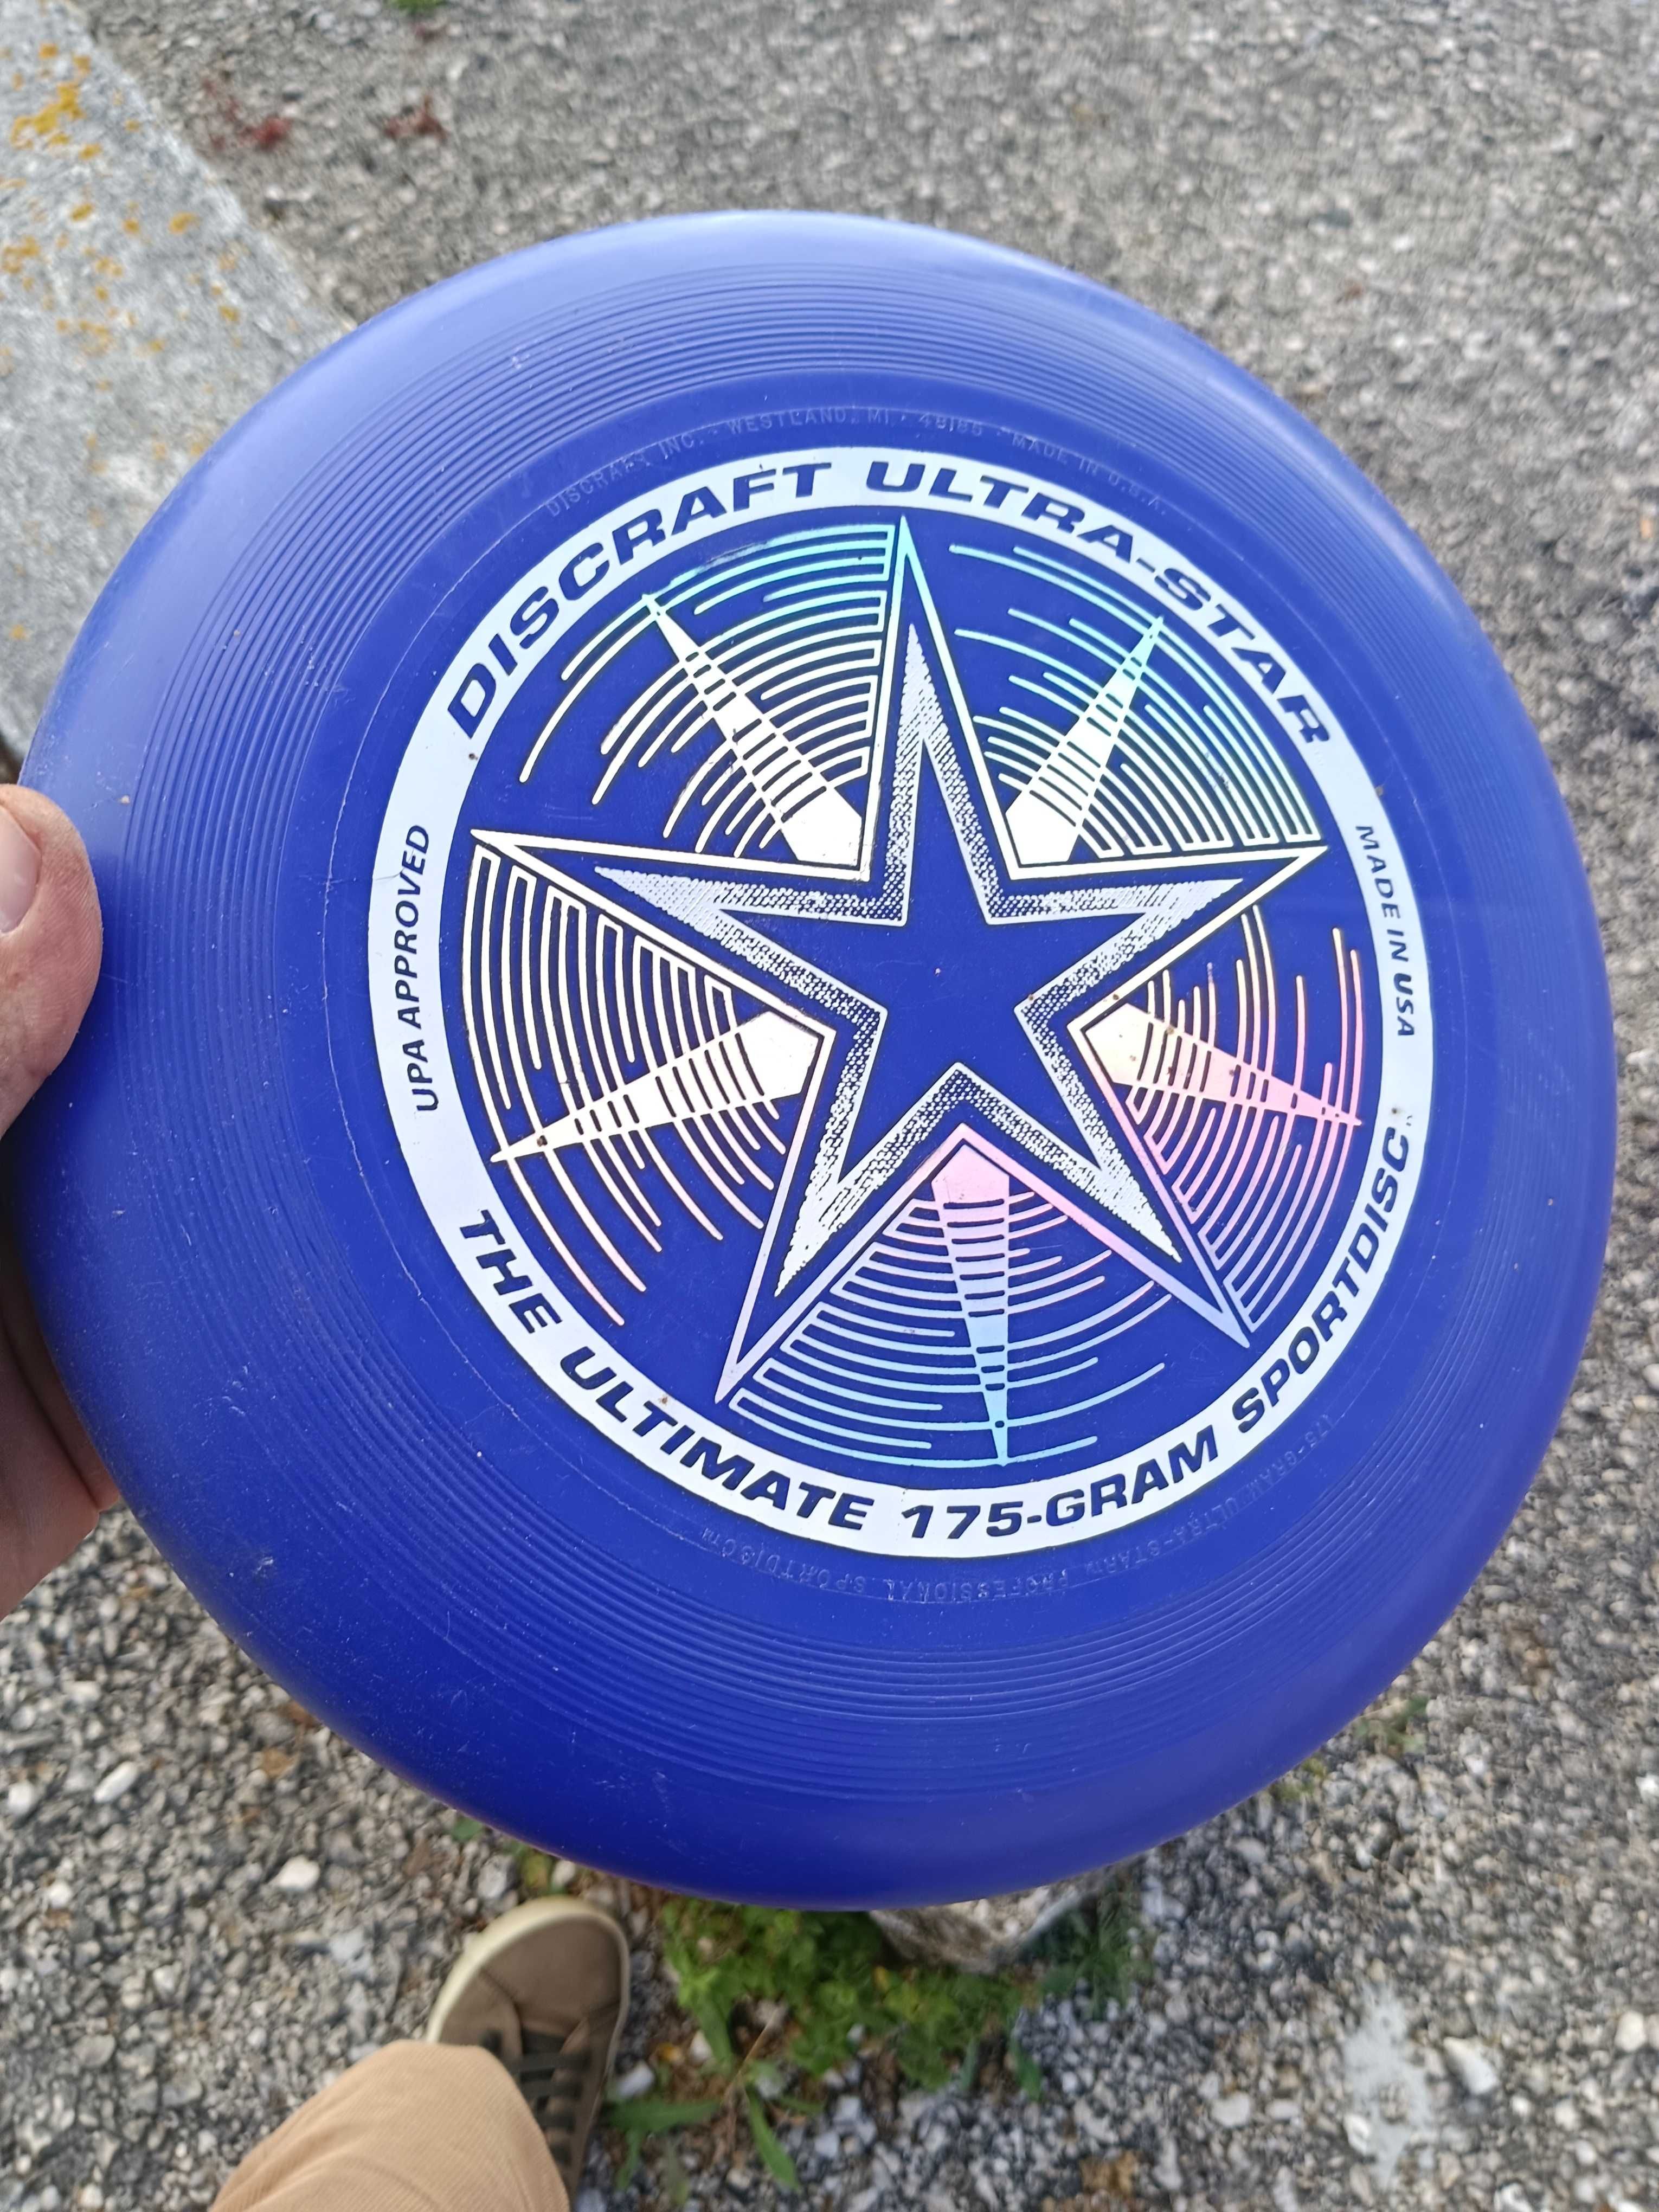 Discos de Ultimate Frisbee